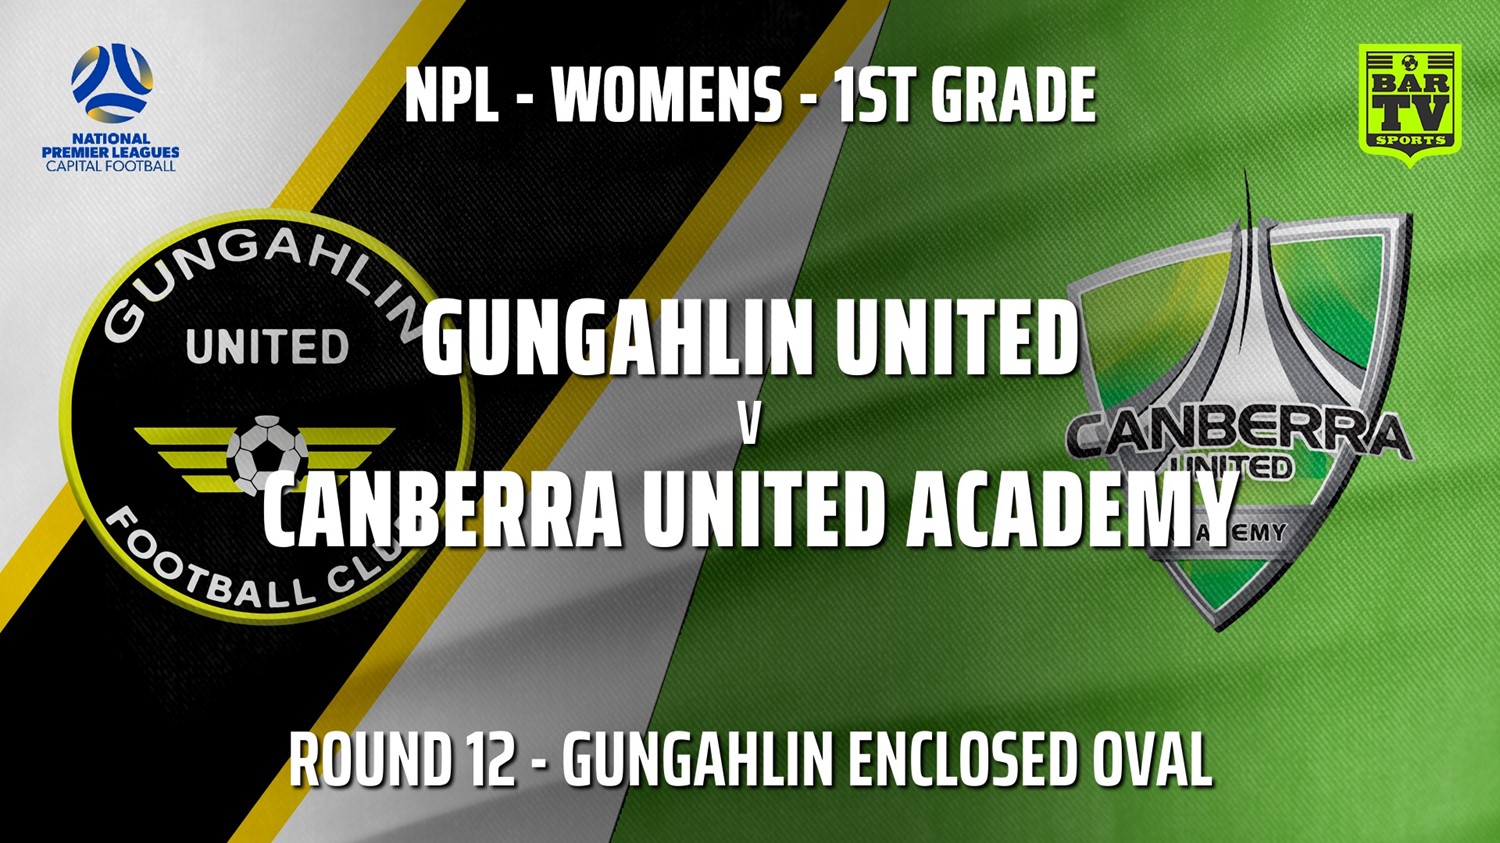 210704-Capital Womens Round 12 - Gungahlin United FC (women) v Canberra United Academy Minigame Slate Image